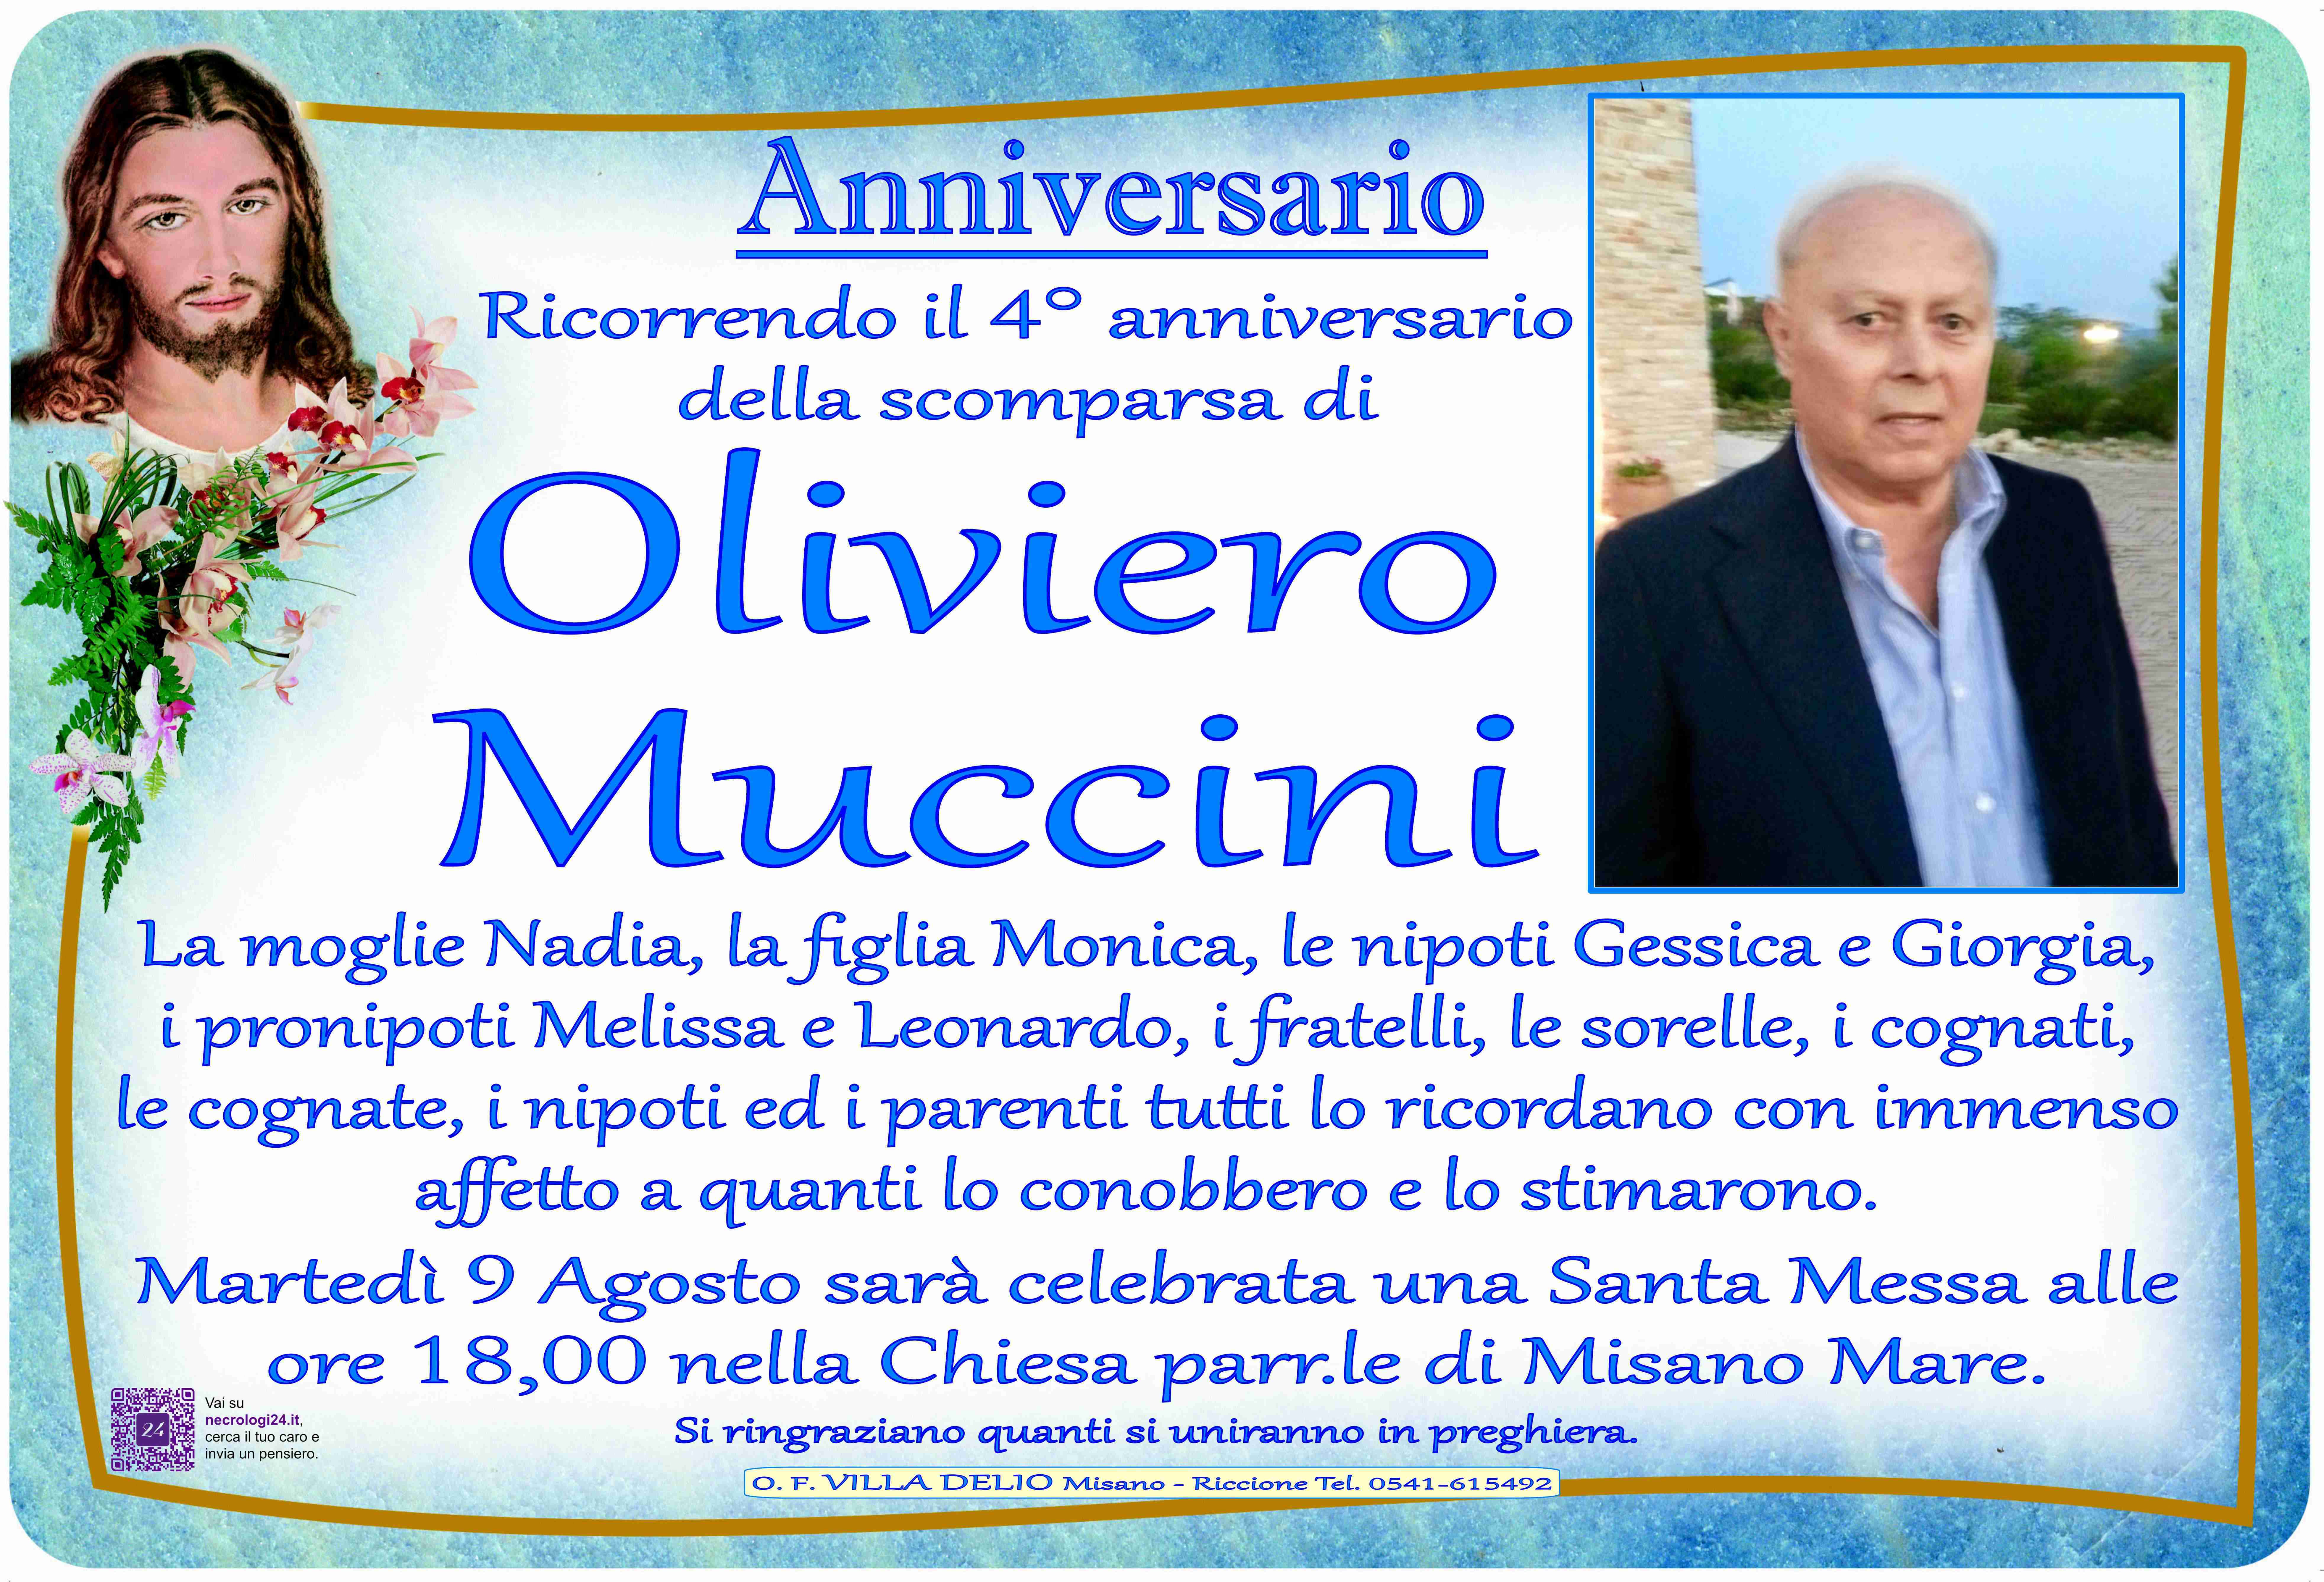 Oliviero Muccini